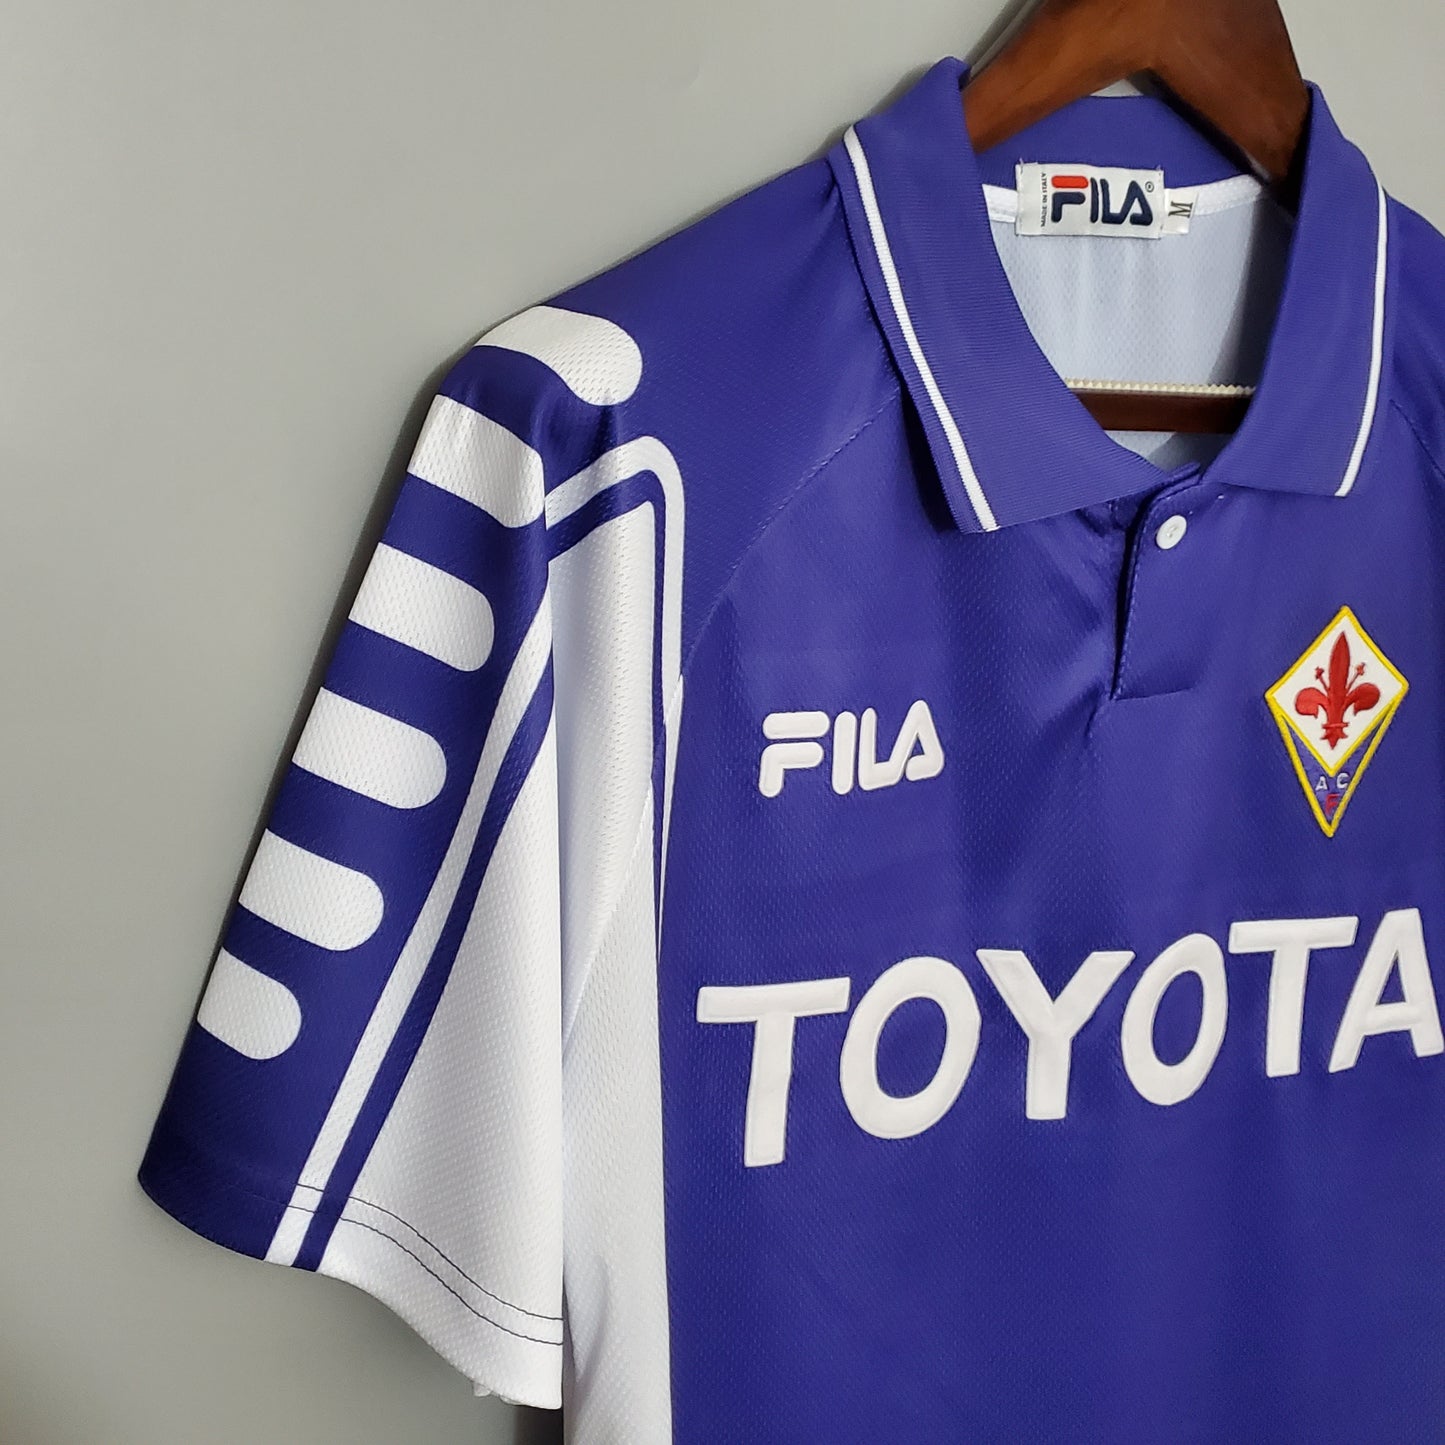 Fiorentina 1999/00 Home Jersey